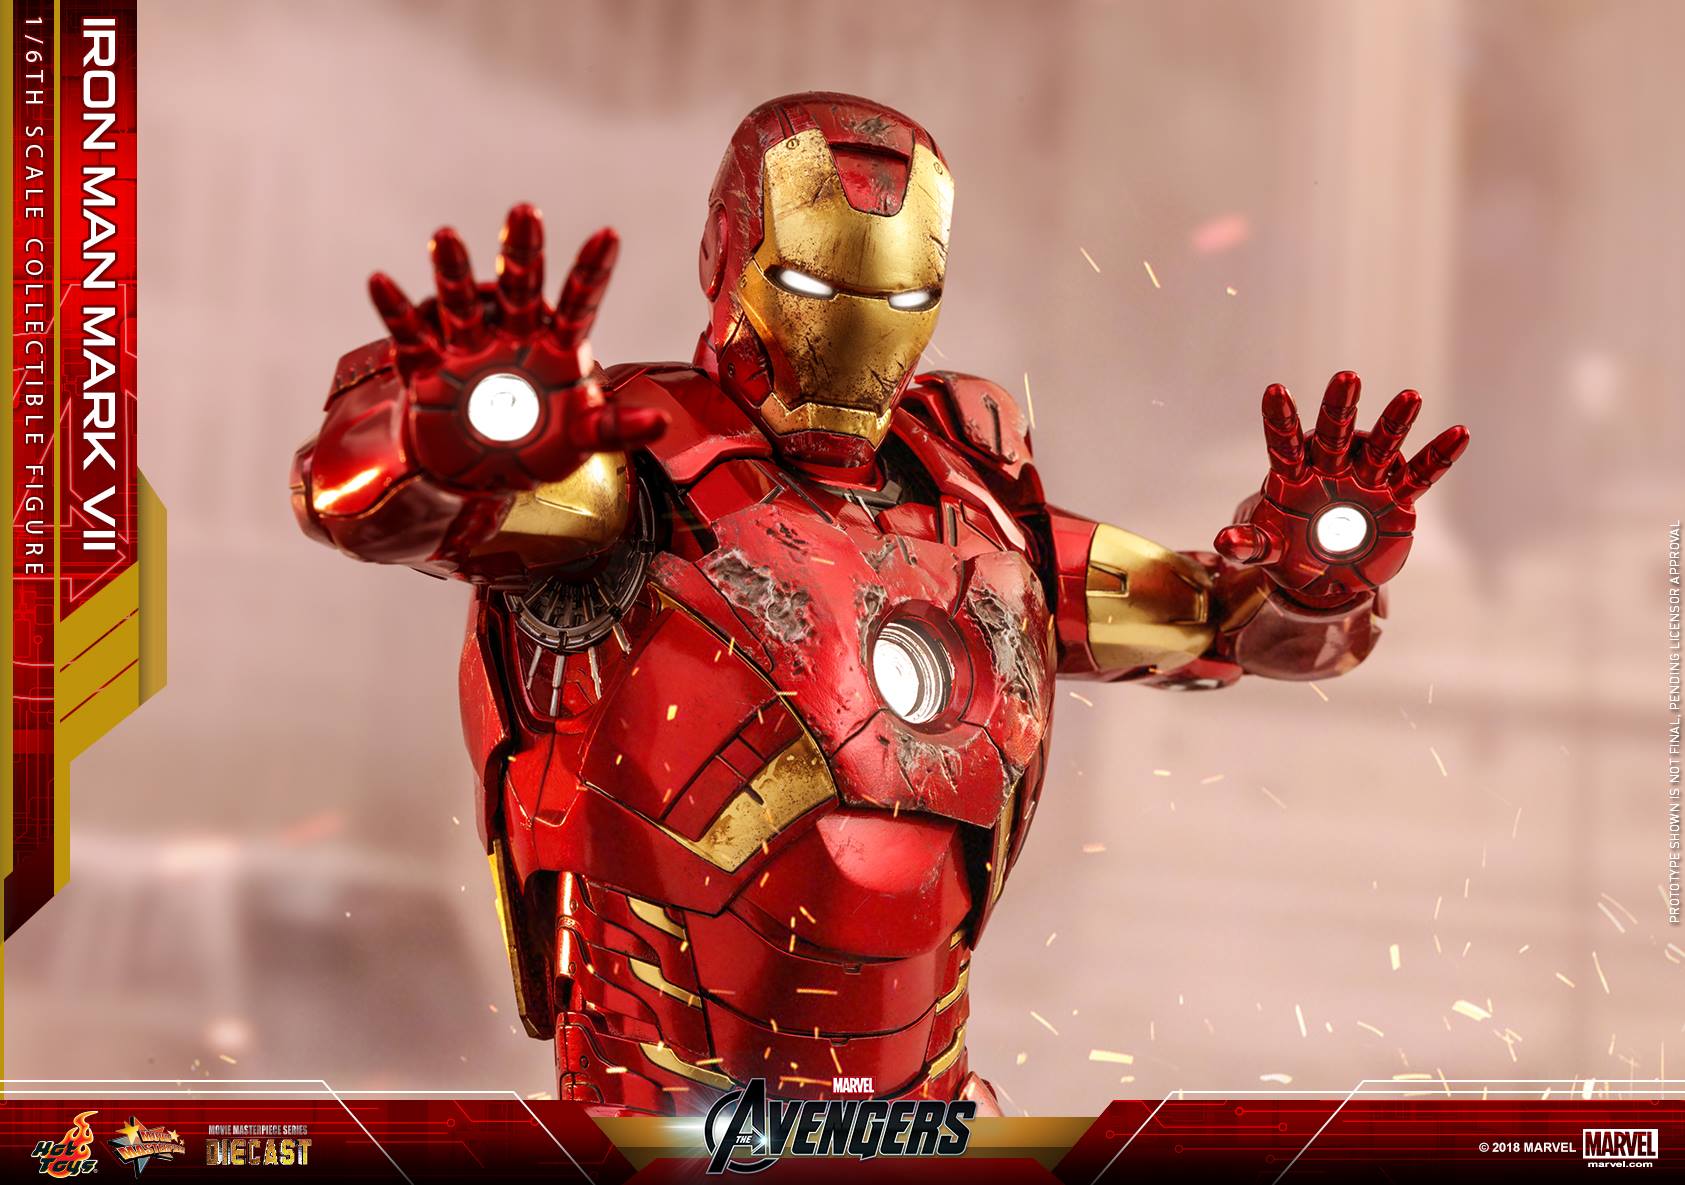 Marvel Hero Iron Spiderman Statue Combat Mode Figures Collectible Model Toy Gift 